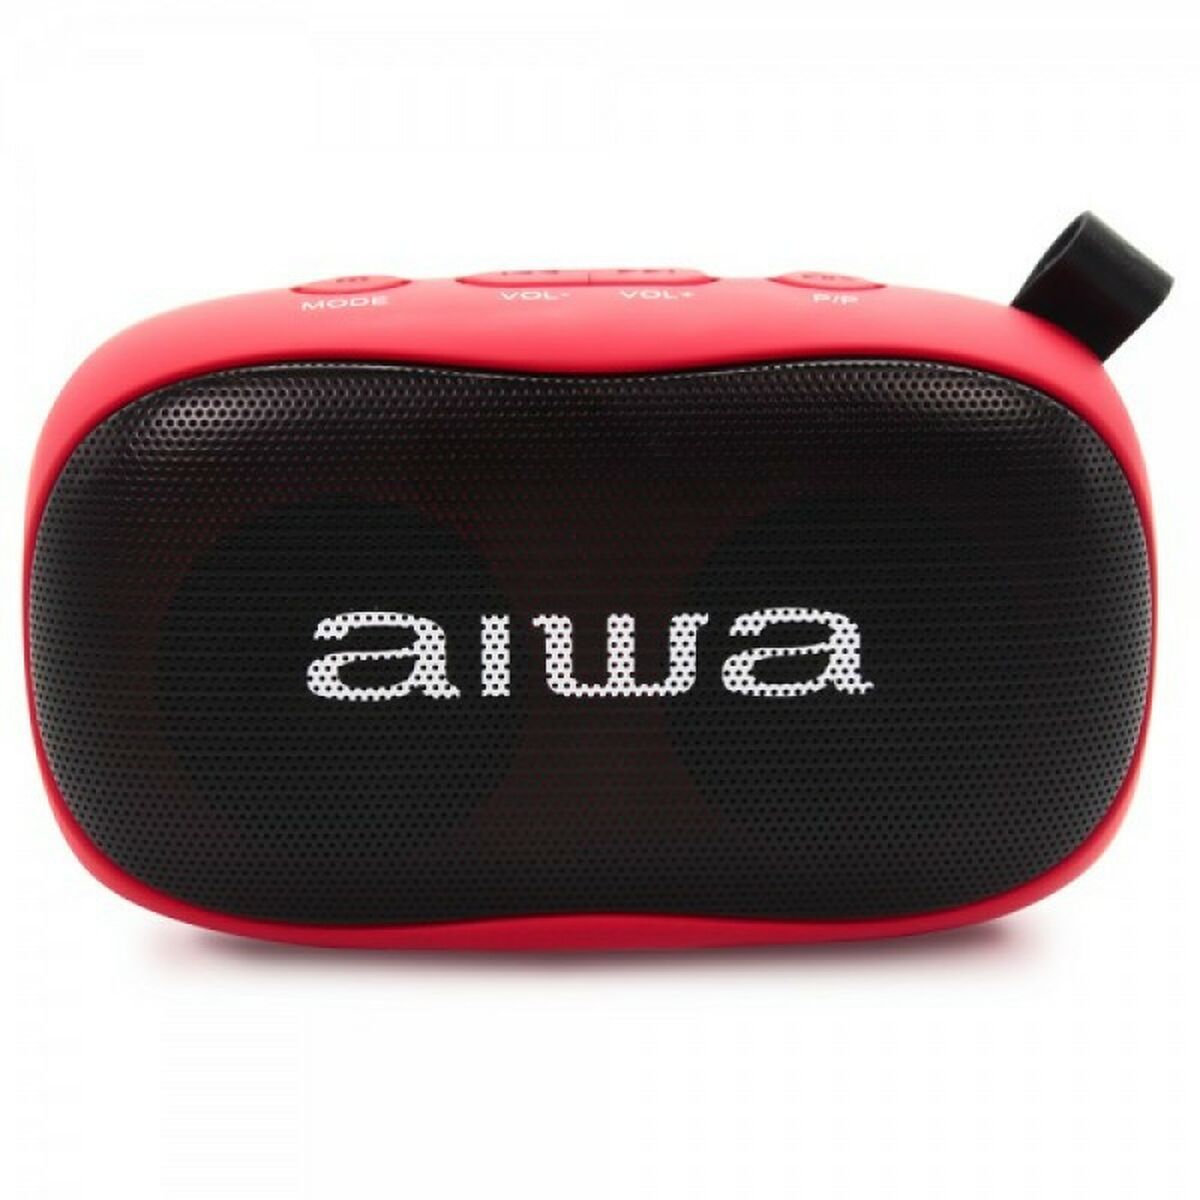 Haut-parleurs bluetooth portables Aiwa BS-110RD 10W Rouge 5 W